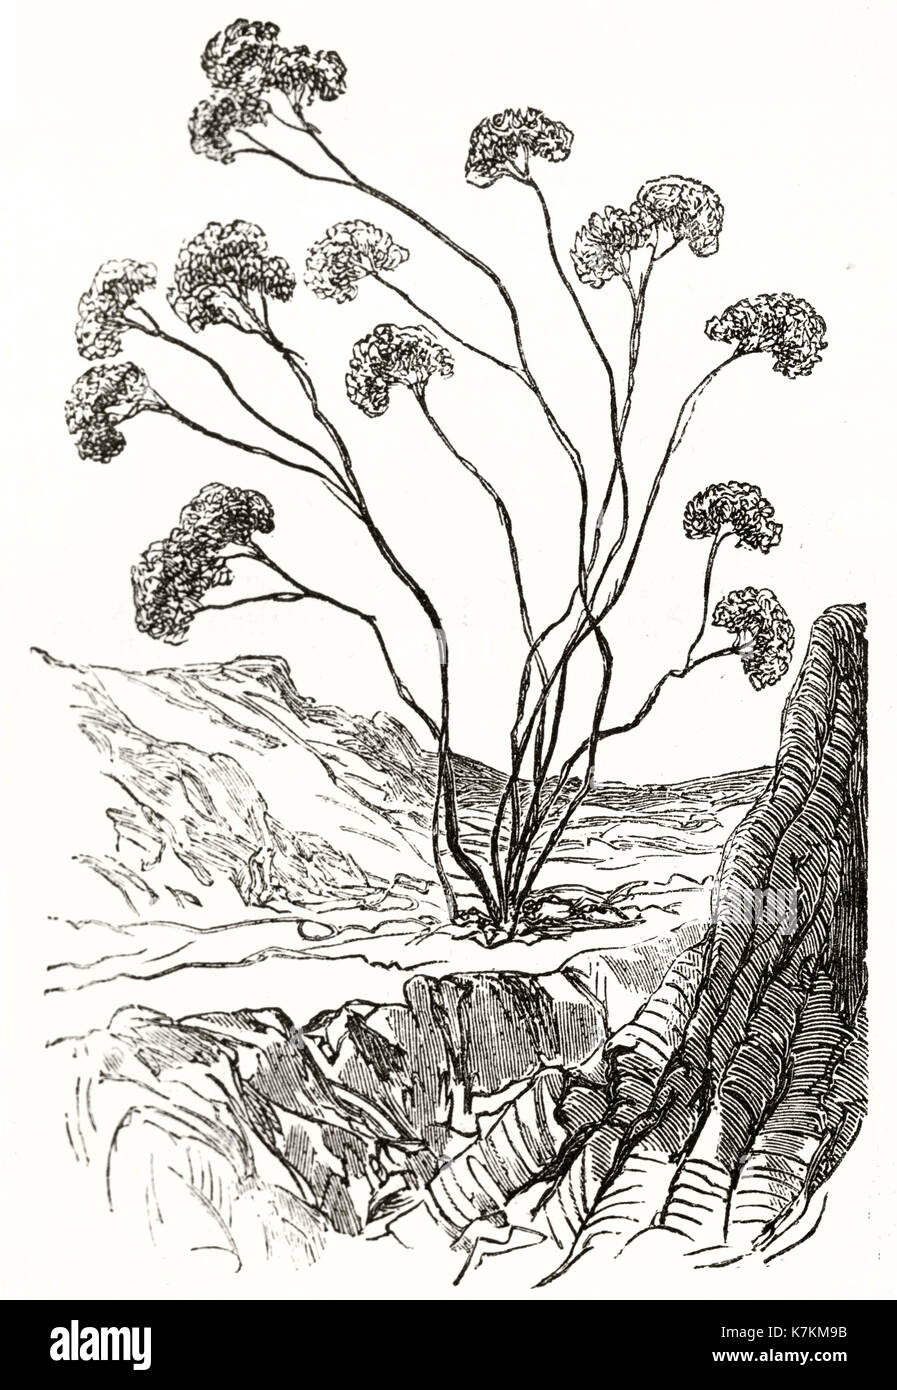 Ilustración antigua de Heliotropium arborescens. Por Riou, publ. en le Tour du Monde, París, 1862 Foto de stock